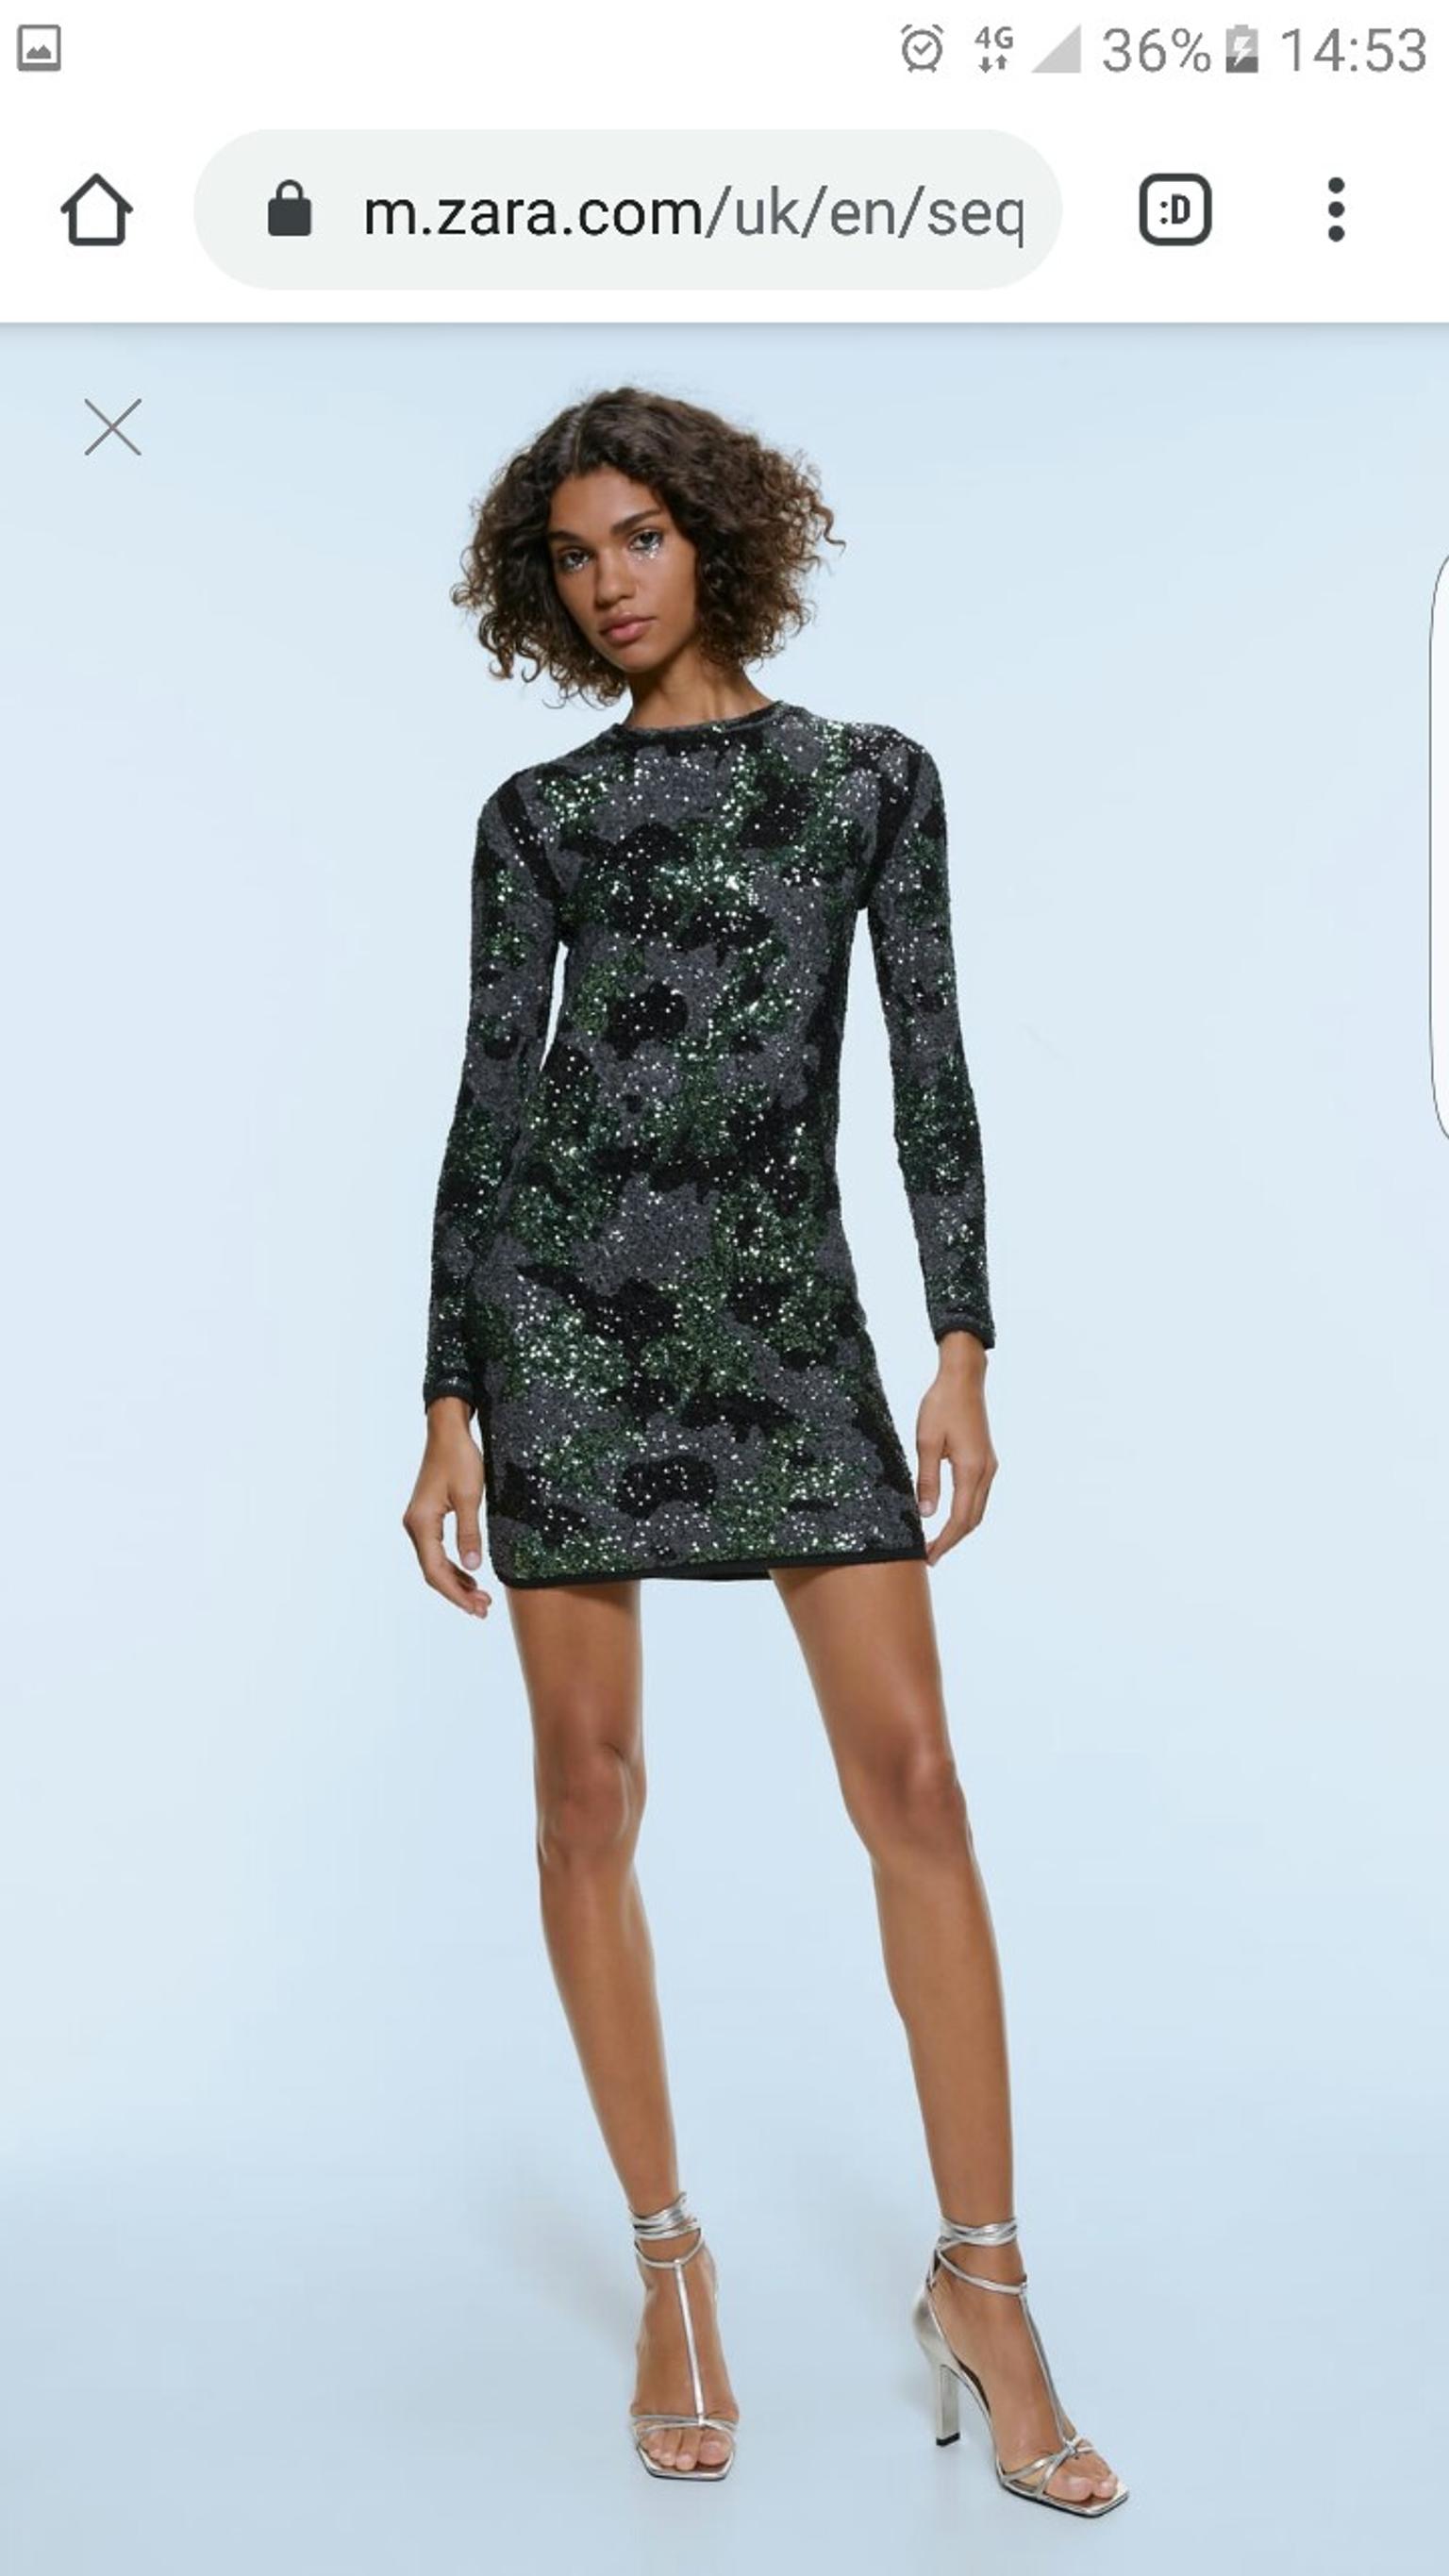 Zara grey/green sequin dress Size M in 